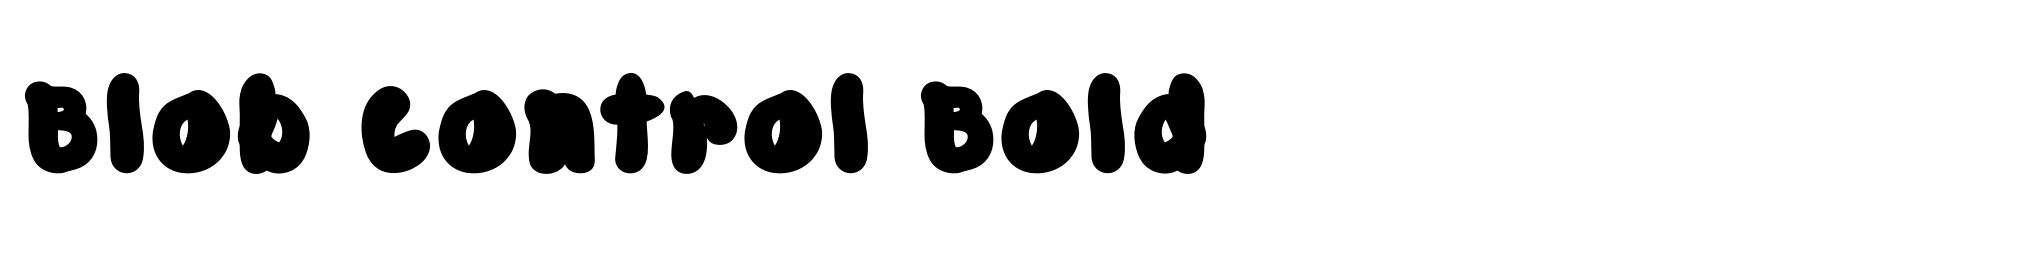 Blob Control Bold image